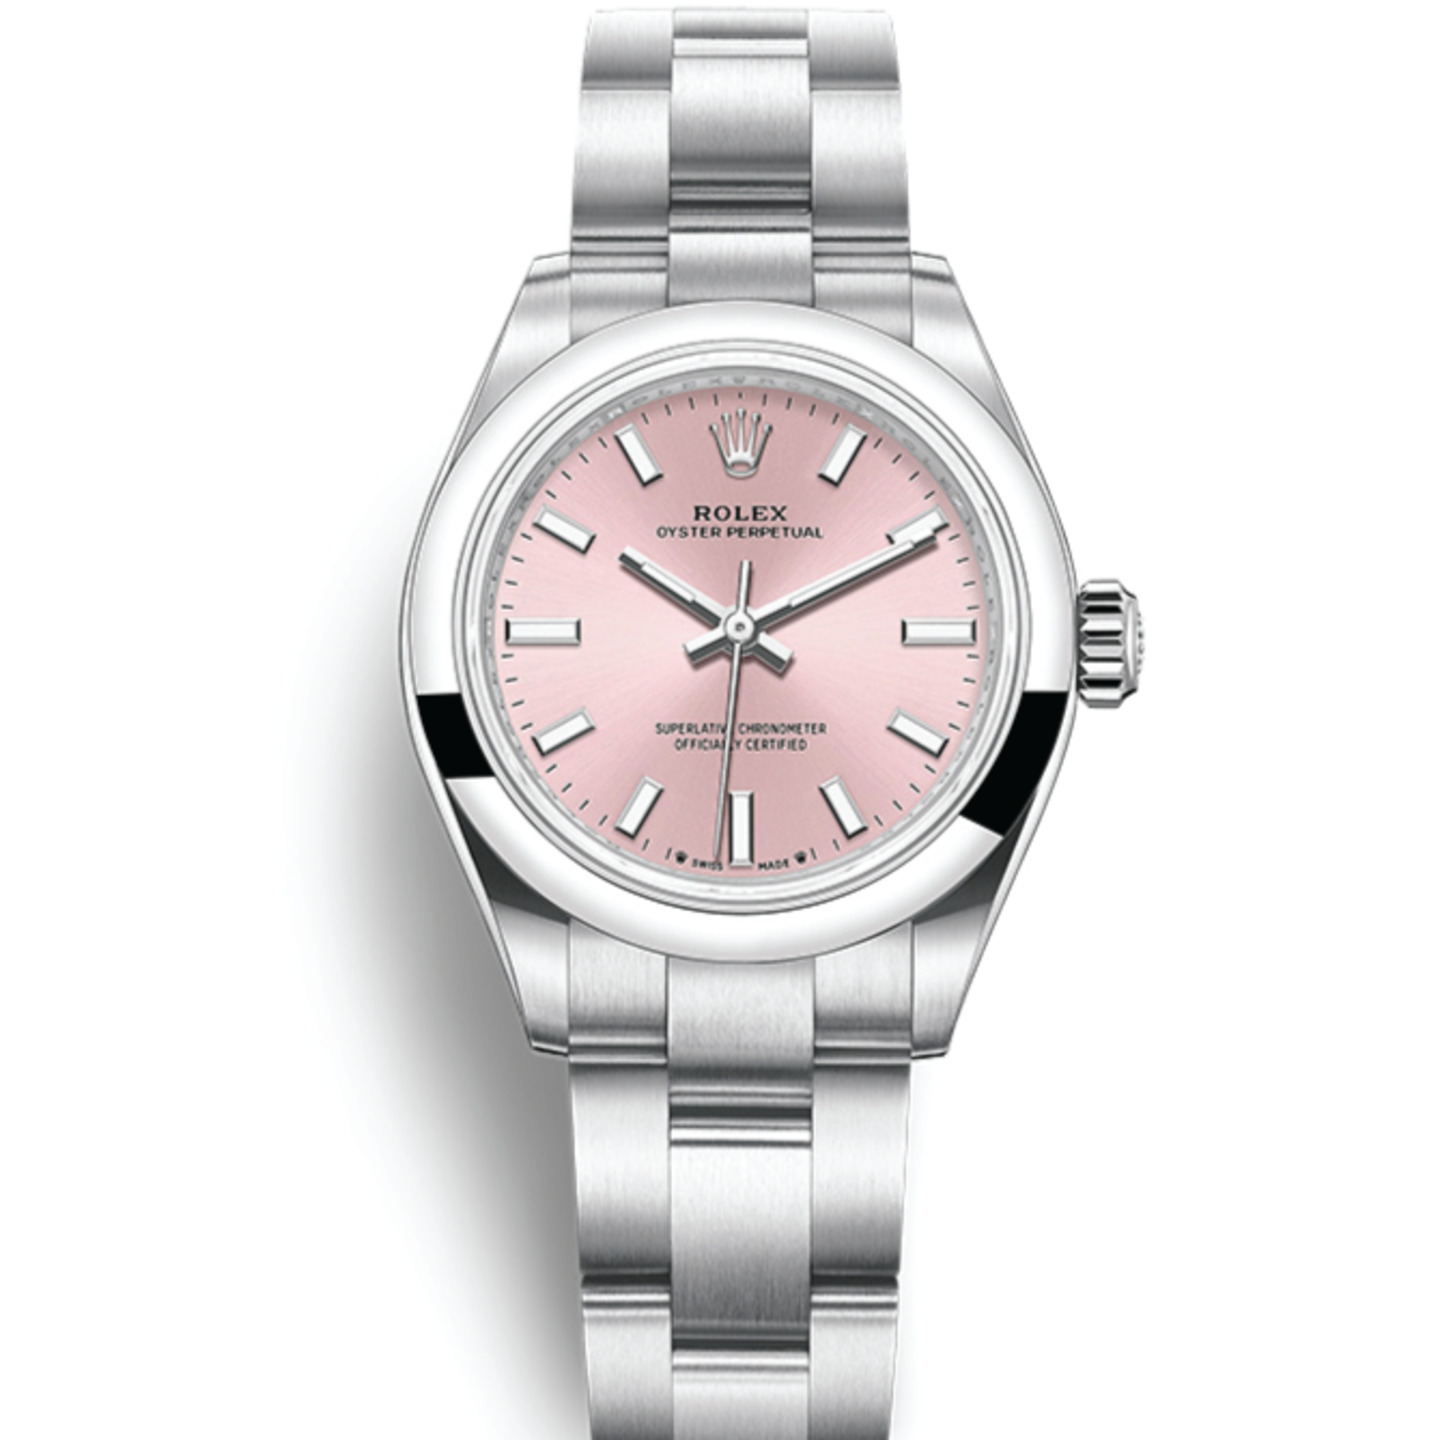 Rolex Oyster Perpetual 28mm 粉紅色錶面蠔式錶帶腕錶